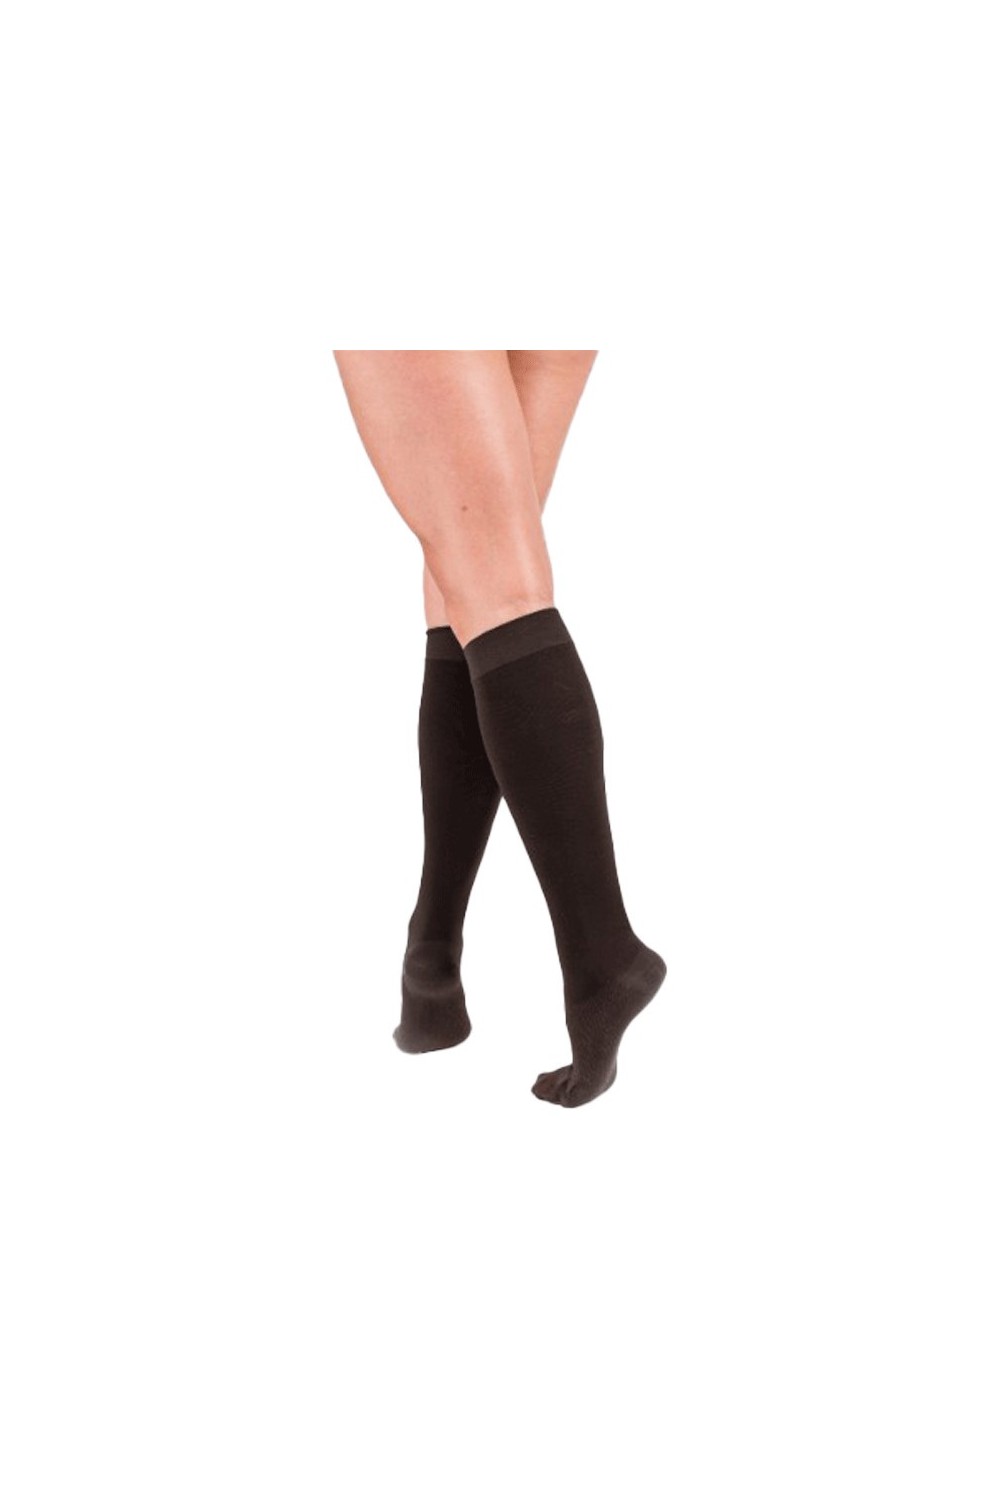 Medilast Comfort Sock Brown T/L